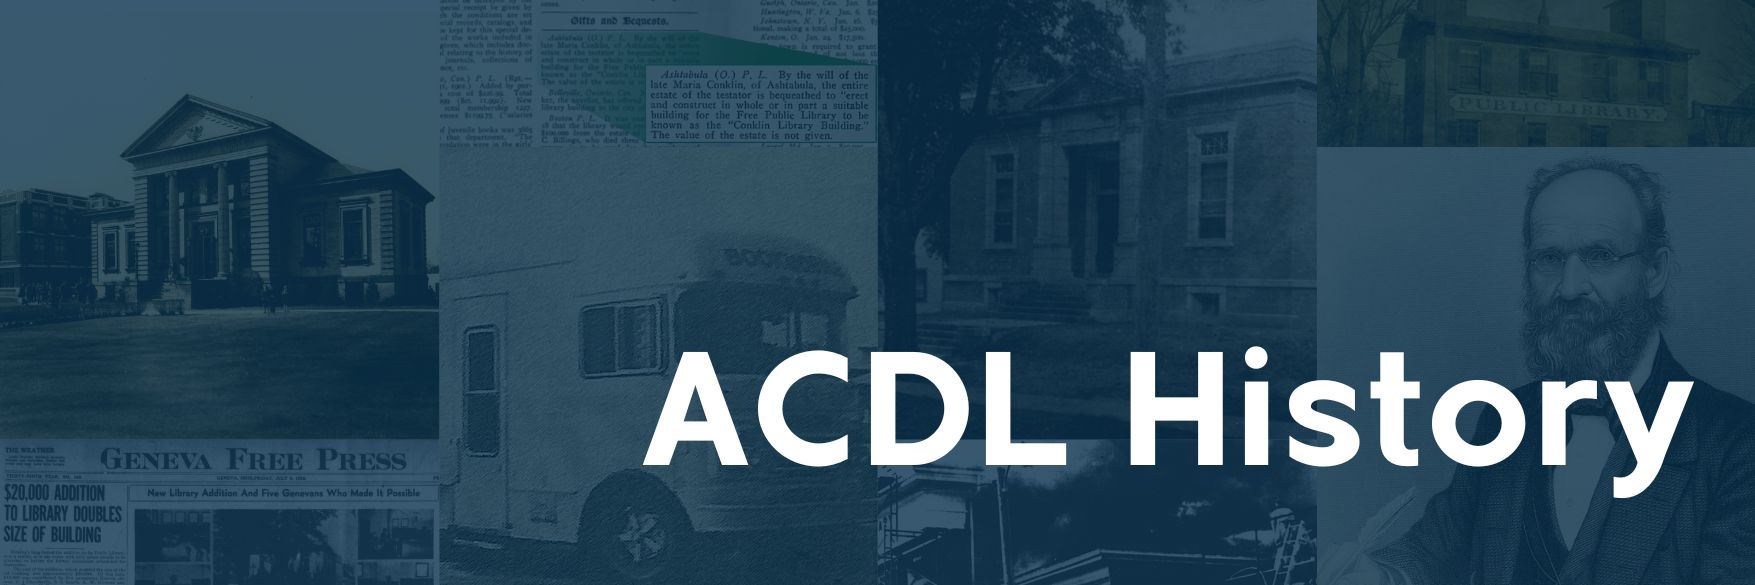 ACDL History Header Image